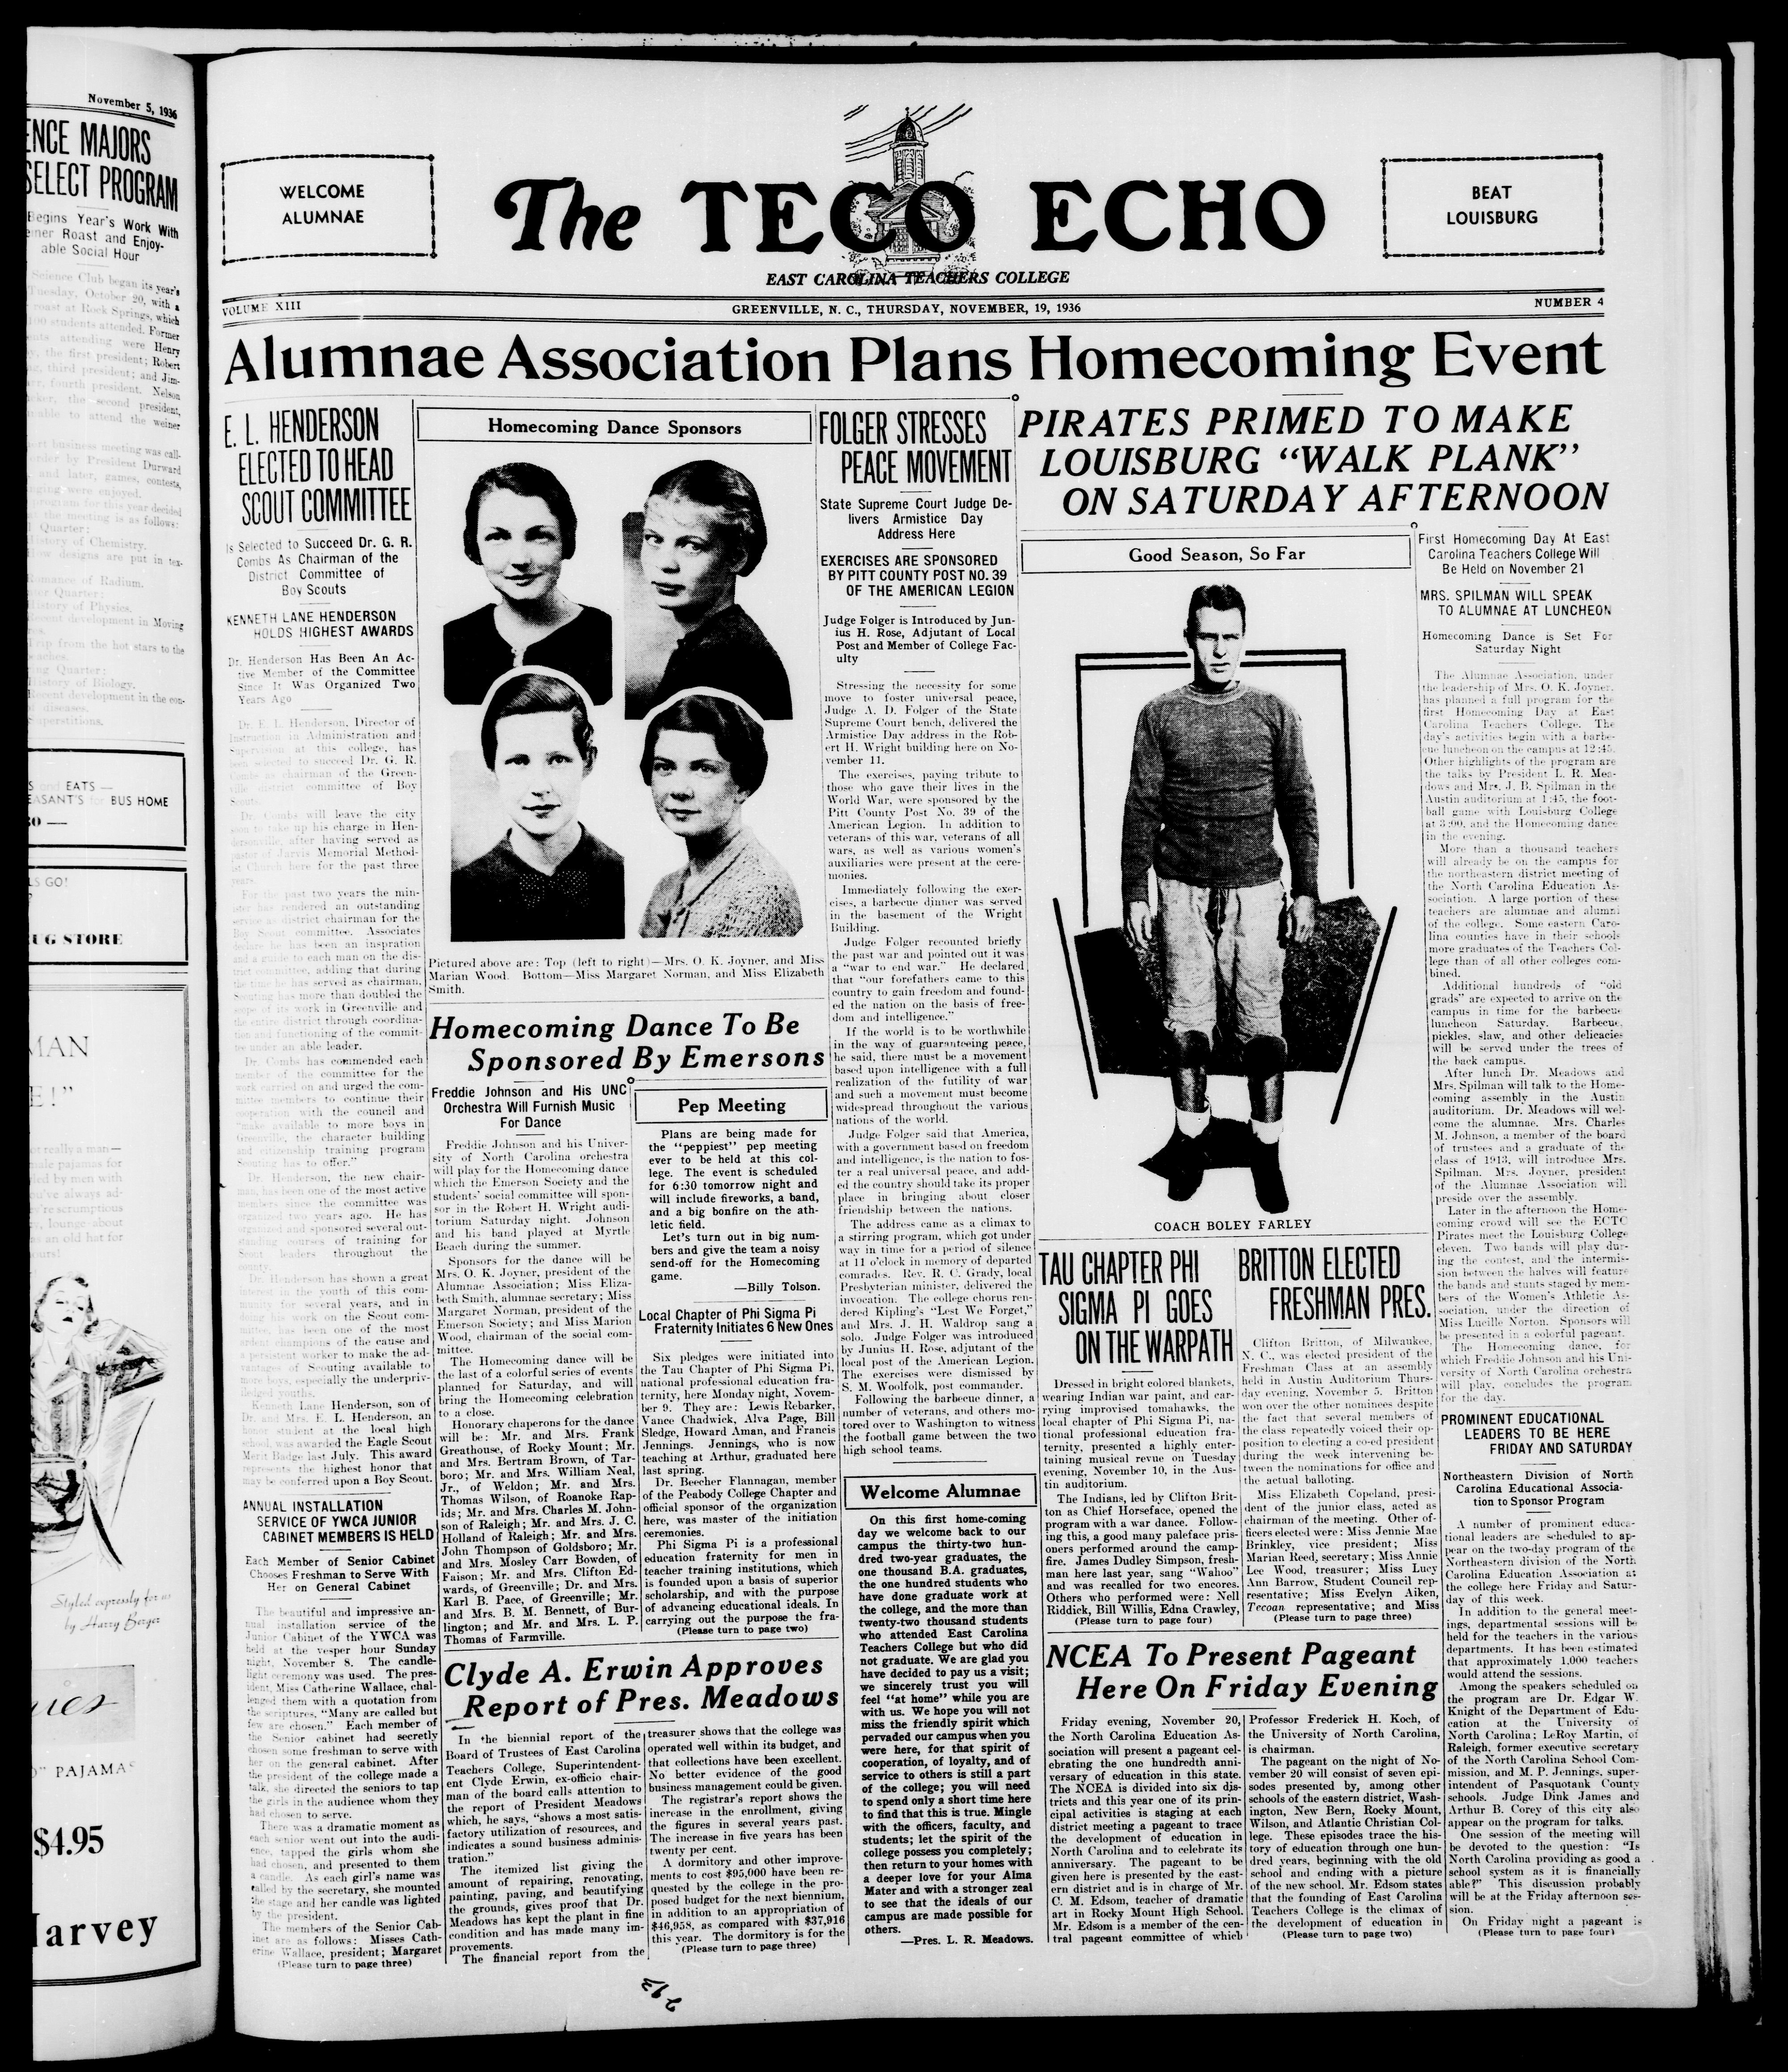 The Teco Echo, November 19, 1936